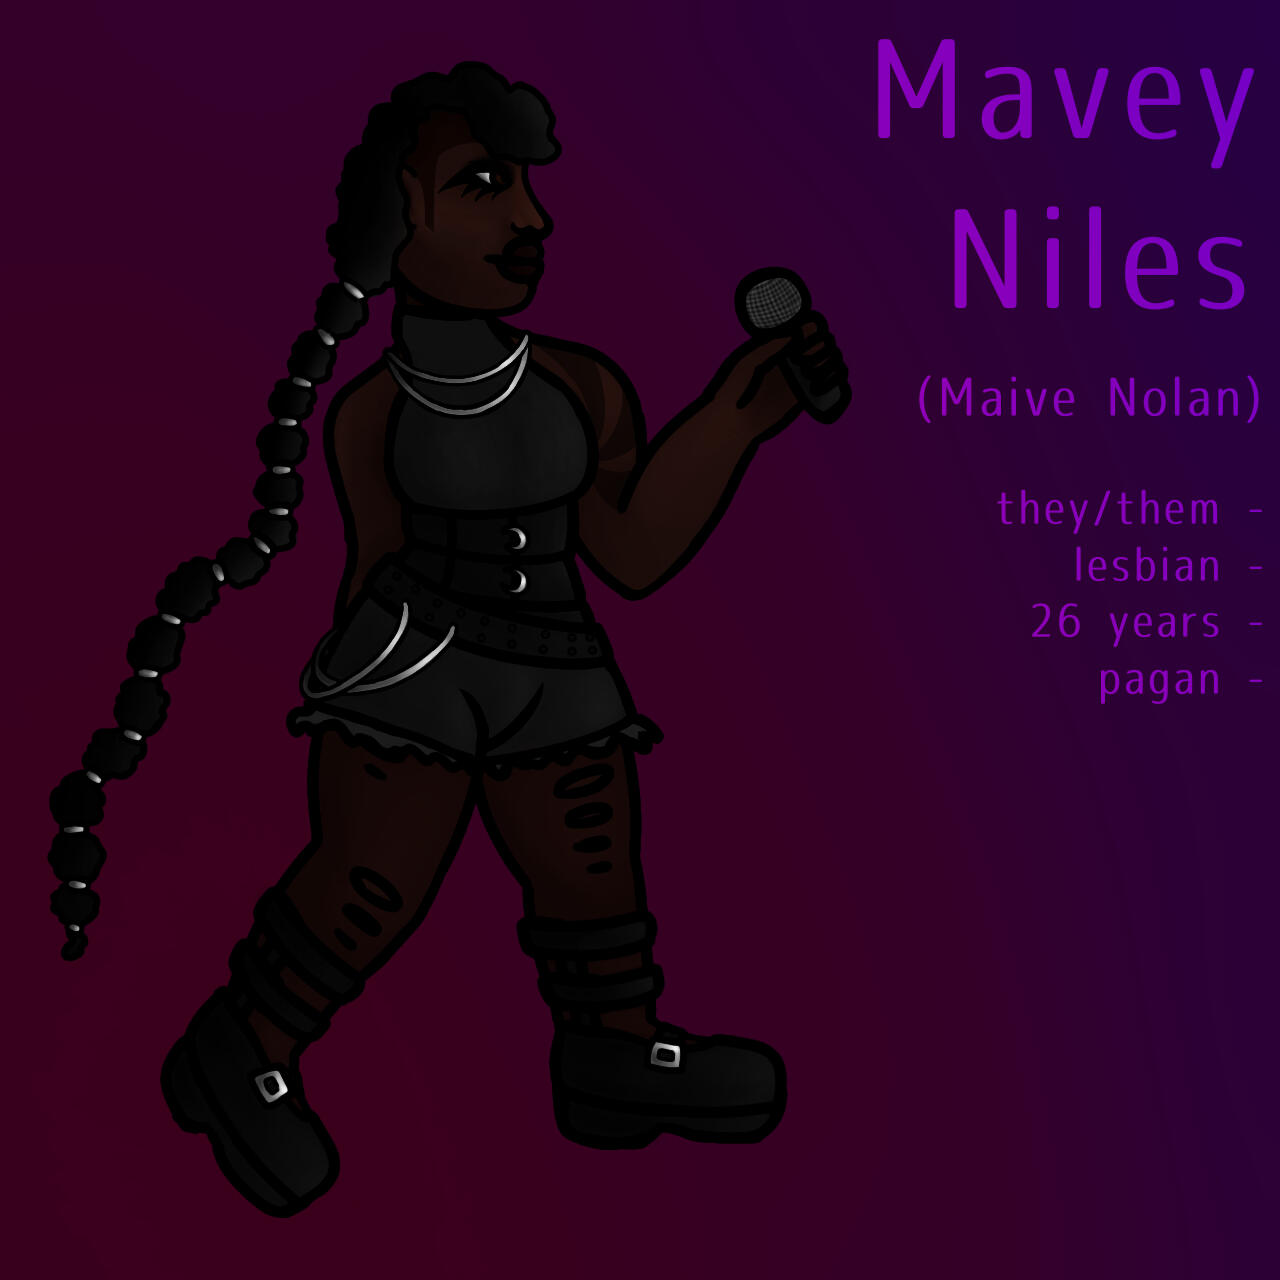 OC Mavey Niles (irl name Maive Nolan).